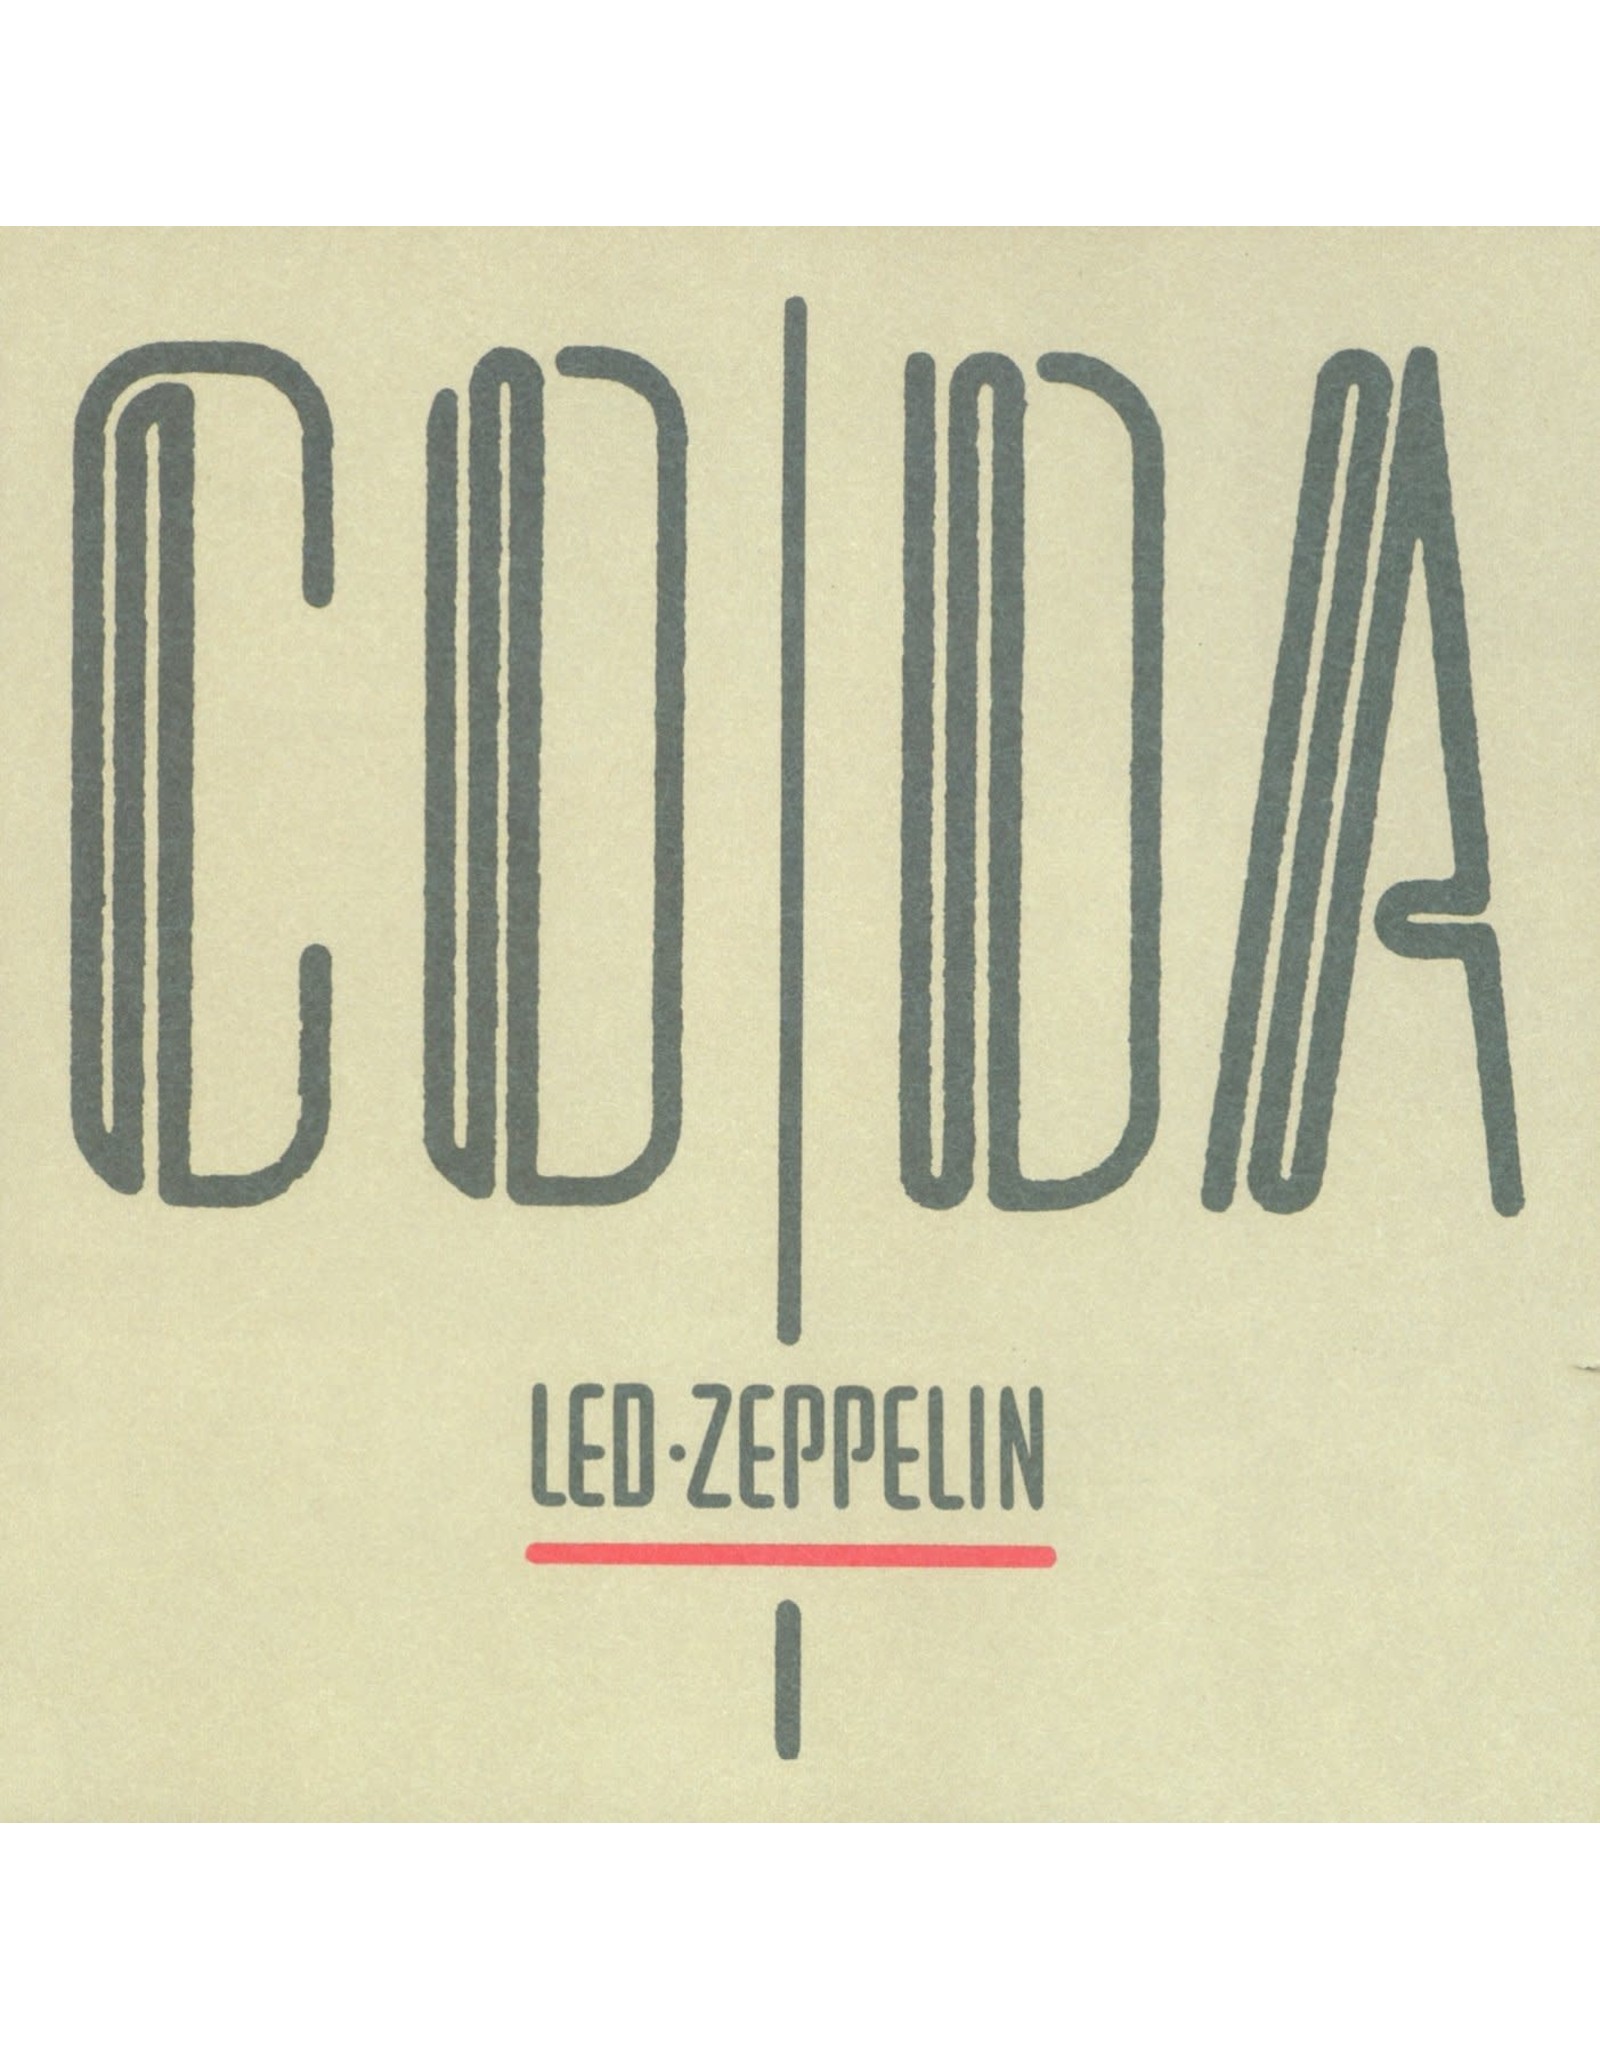 Led Zeppelin - Coda (Deluxe)